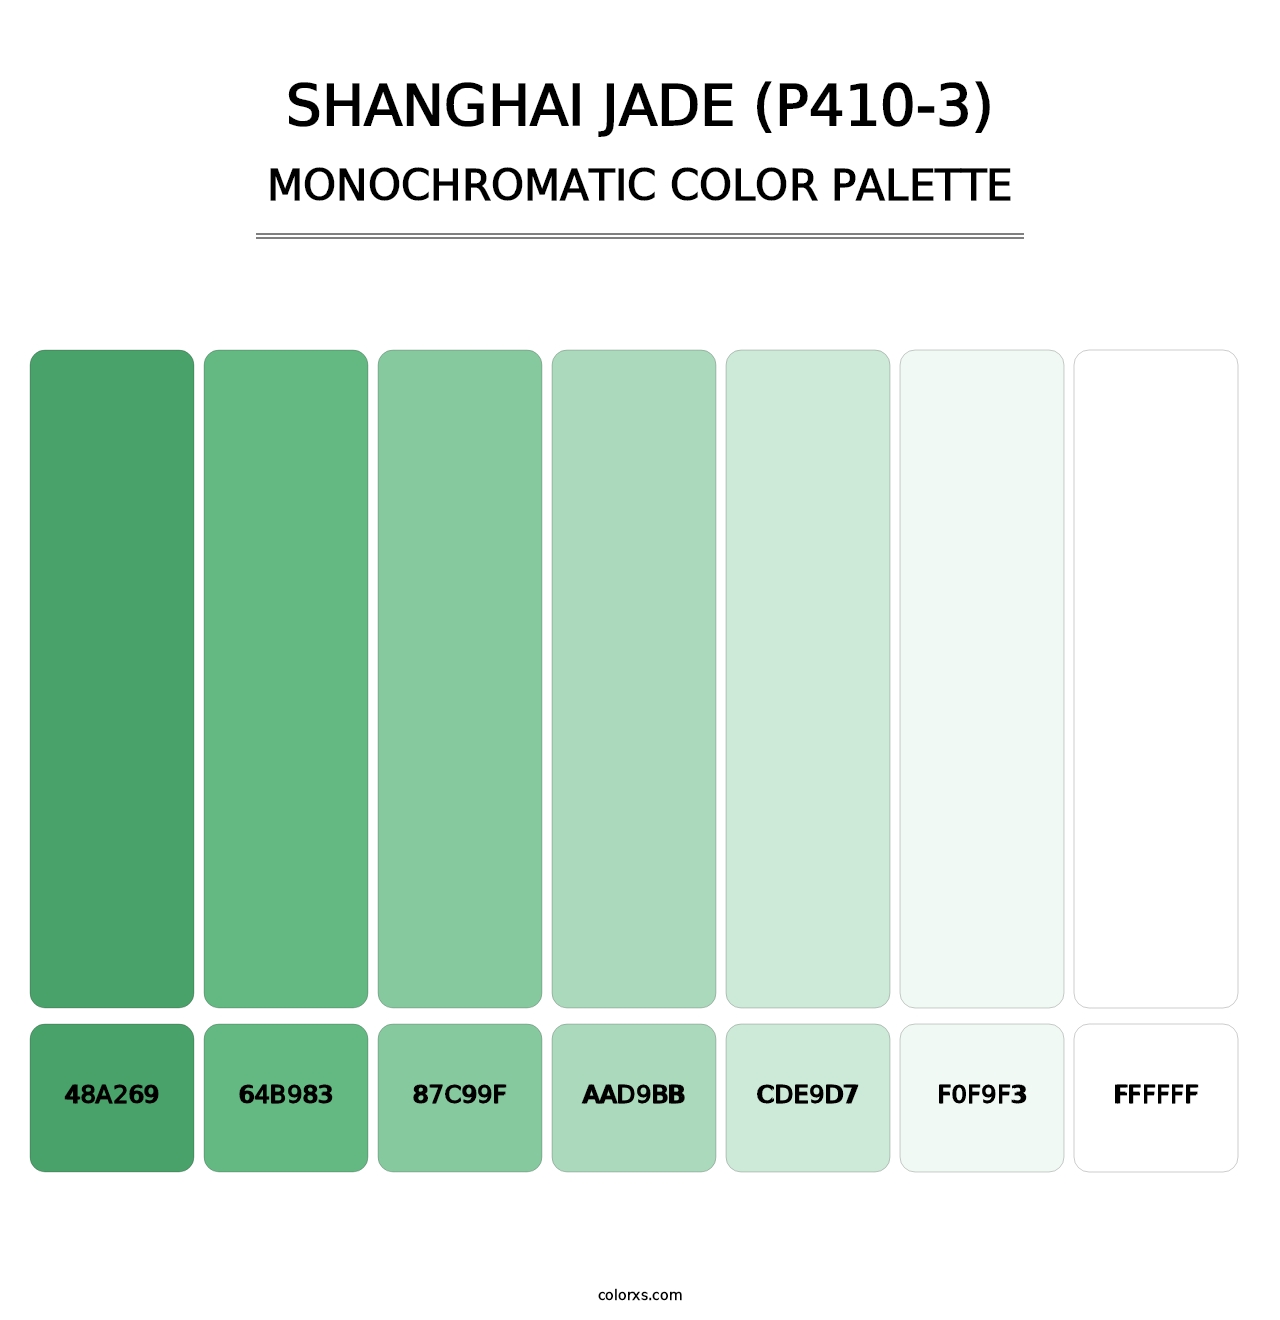 Shanghai Jade (P410-3) - Monochromatic Color Palette